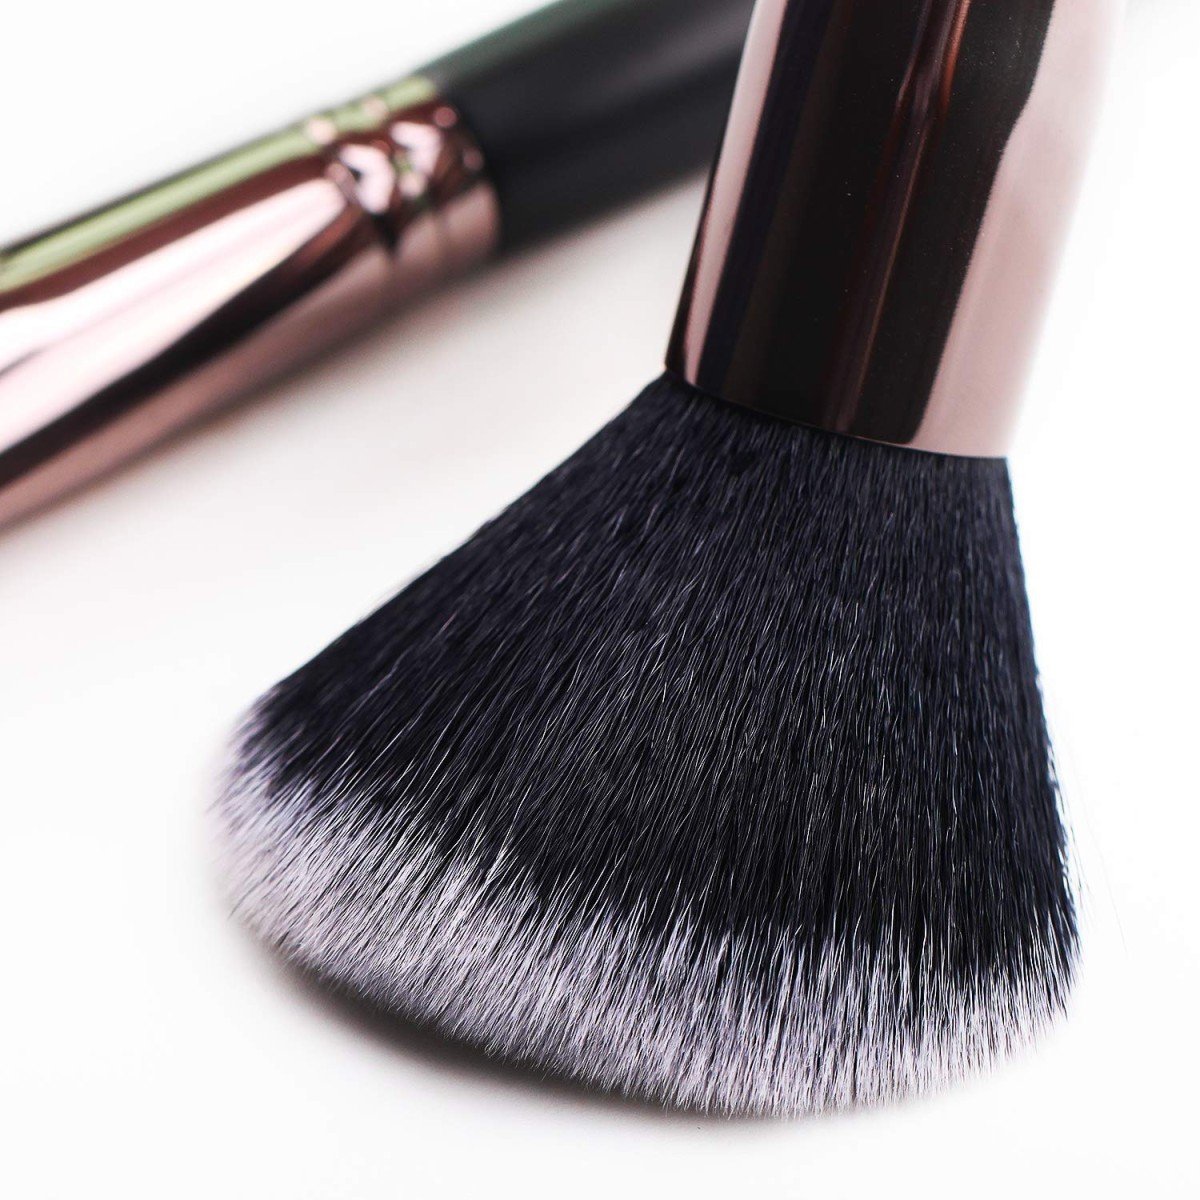 24pc beauty makeup brush for professionsls